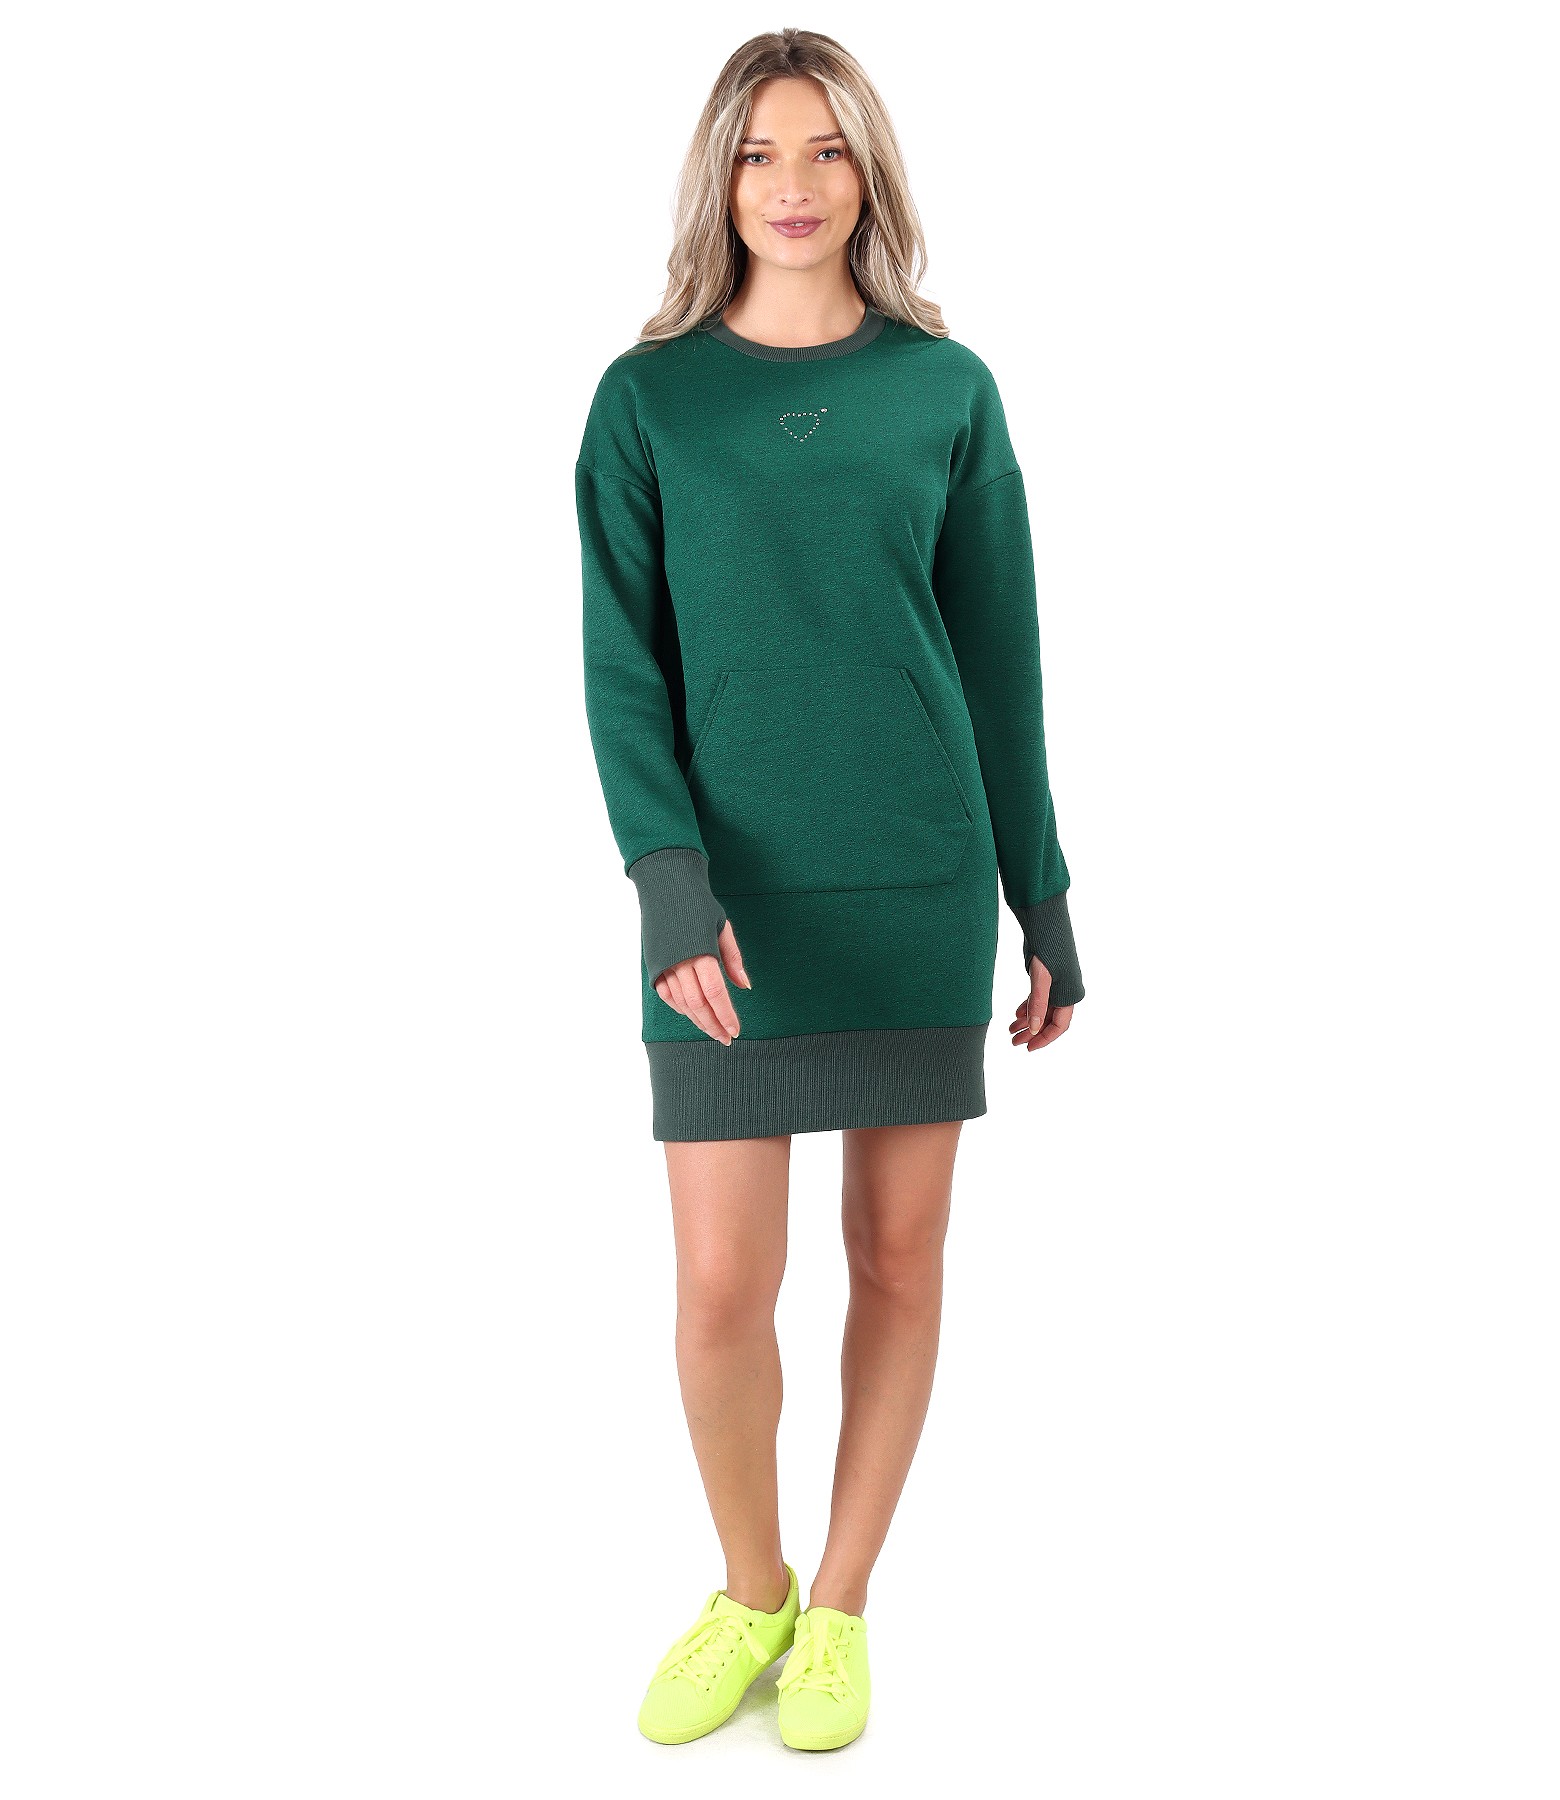 Sweatshirt dress made of cotton with front pocket green - YOKKO